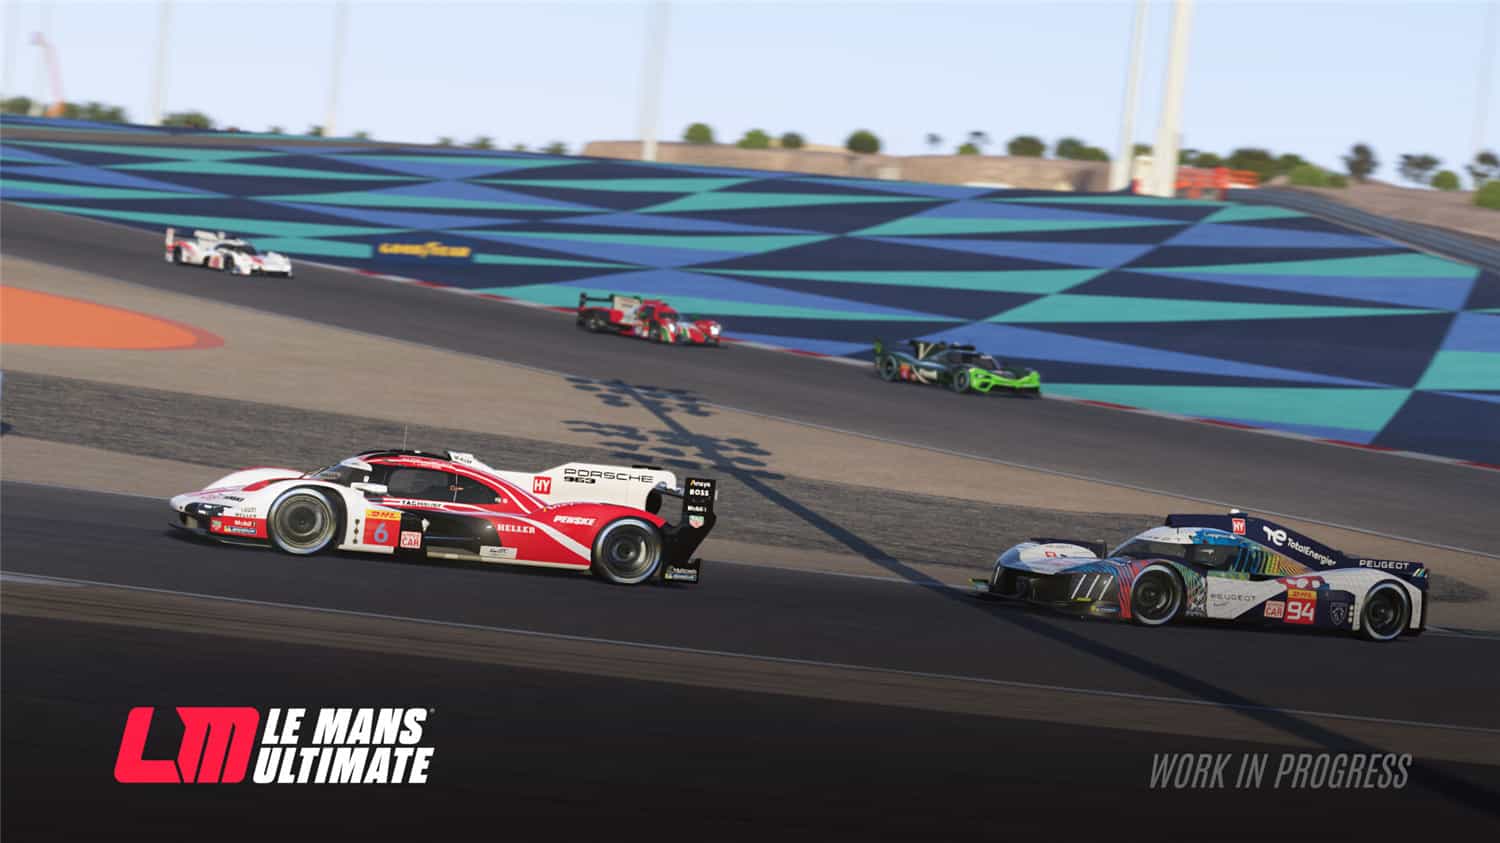 勒芒终极赛/Le Mans Ultimate v0.1000 官方原版英文 18GB插图3